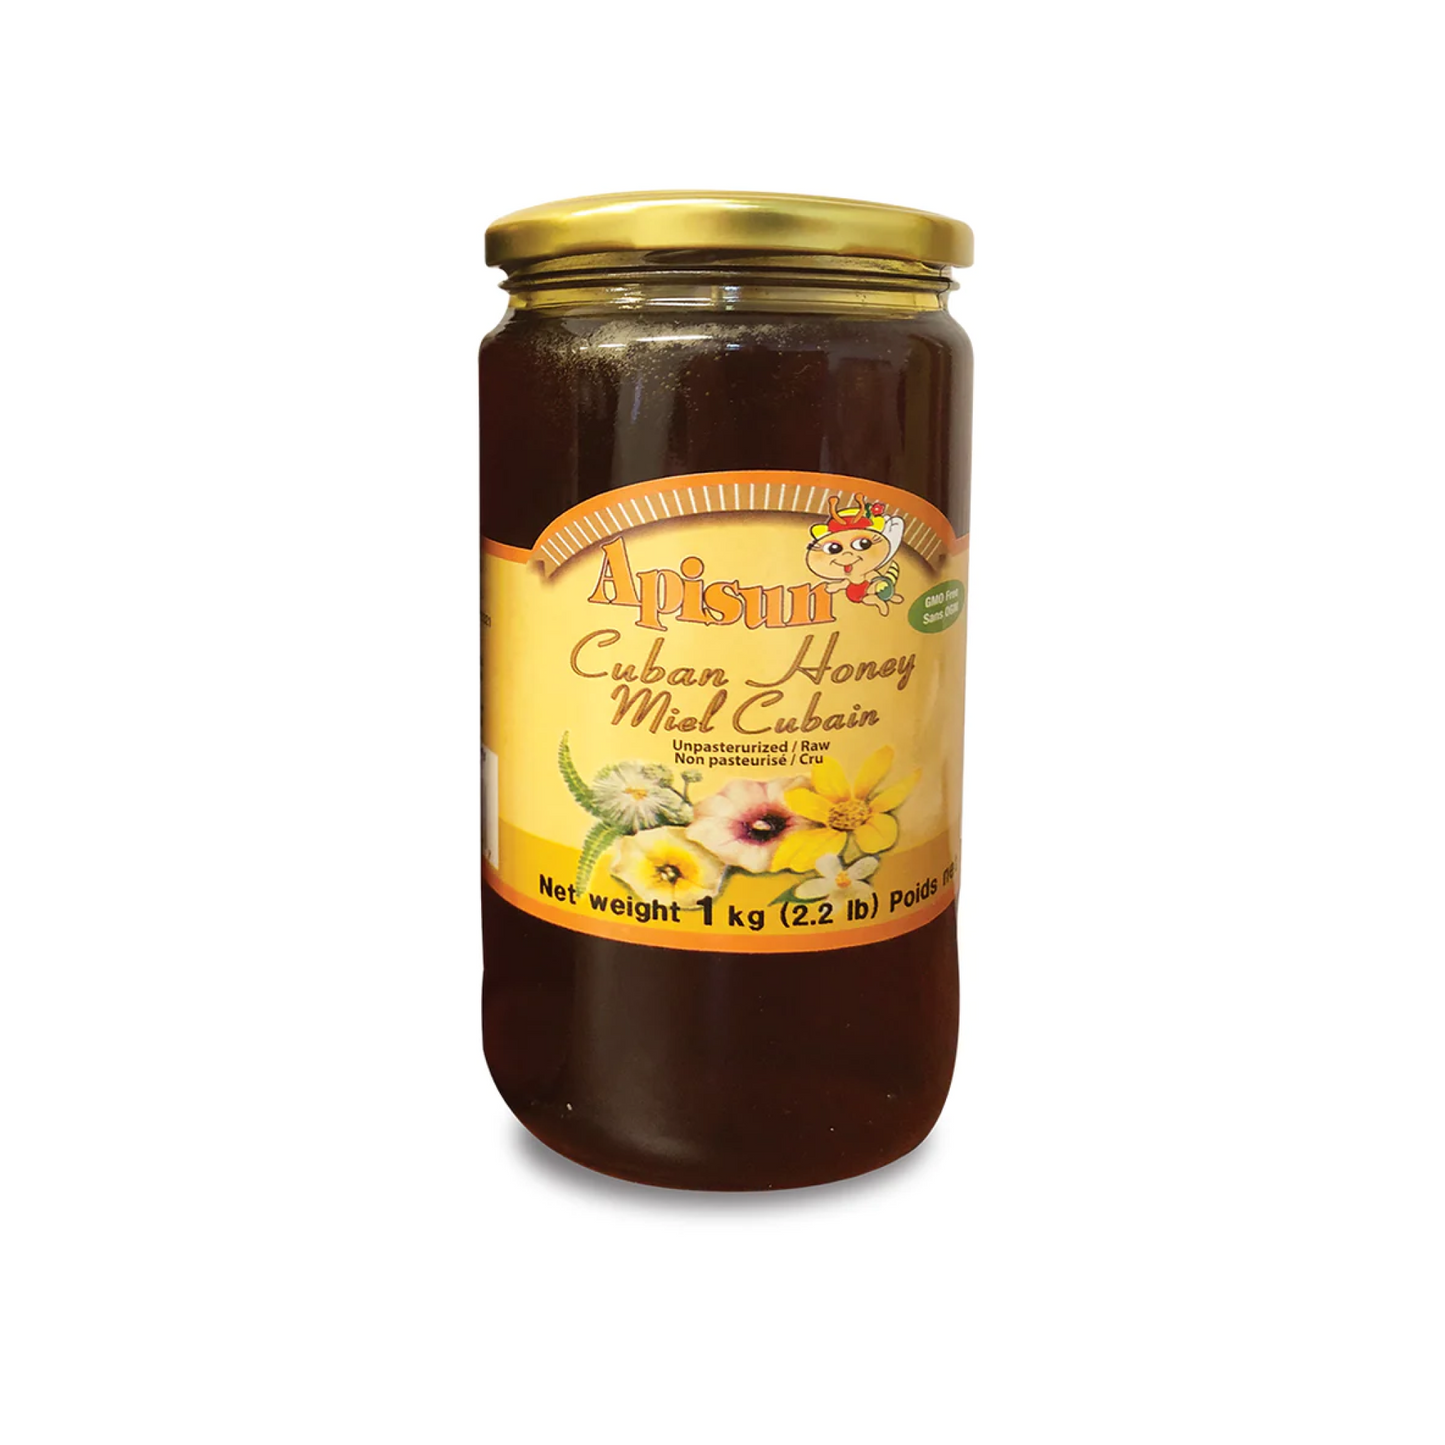 Apisun Cuban Honey Unpasteurized 1KG